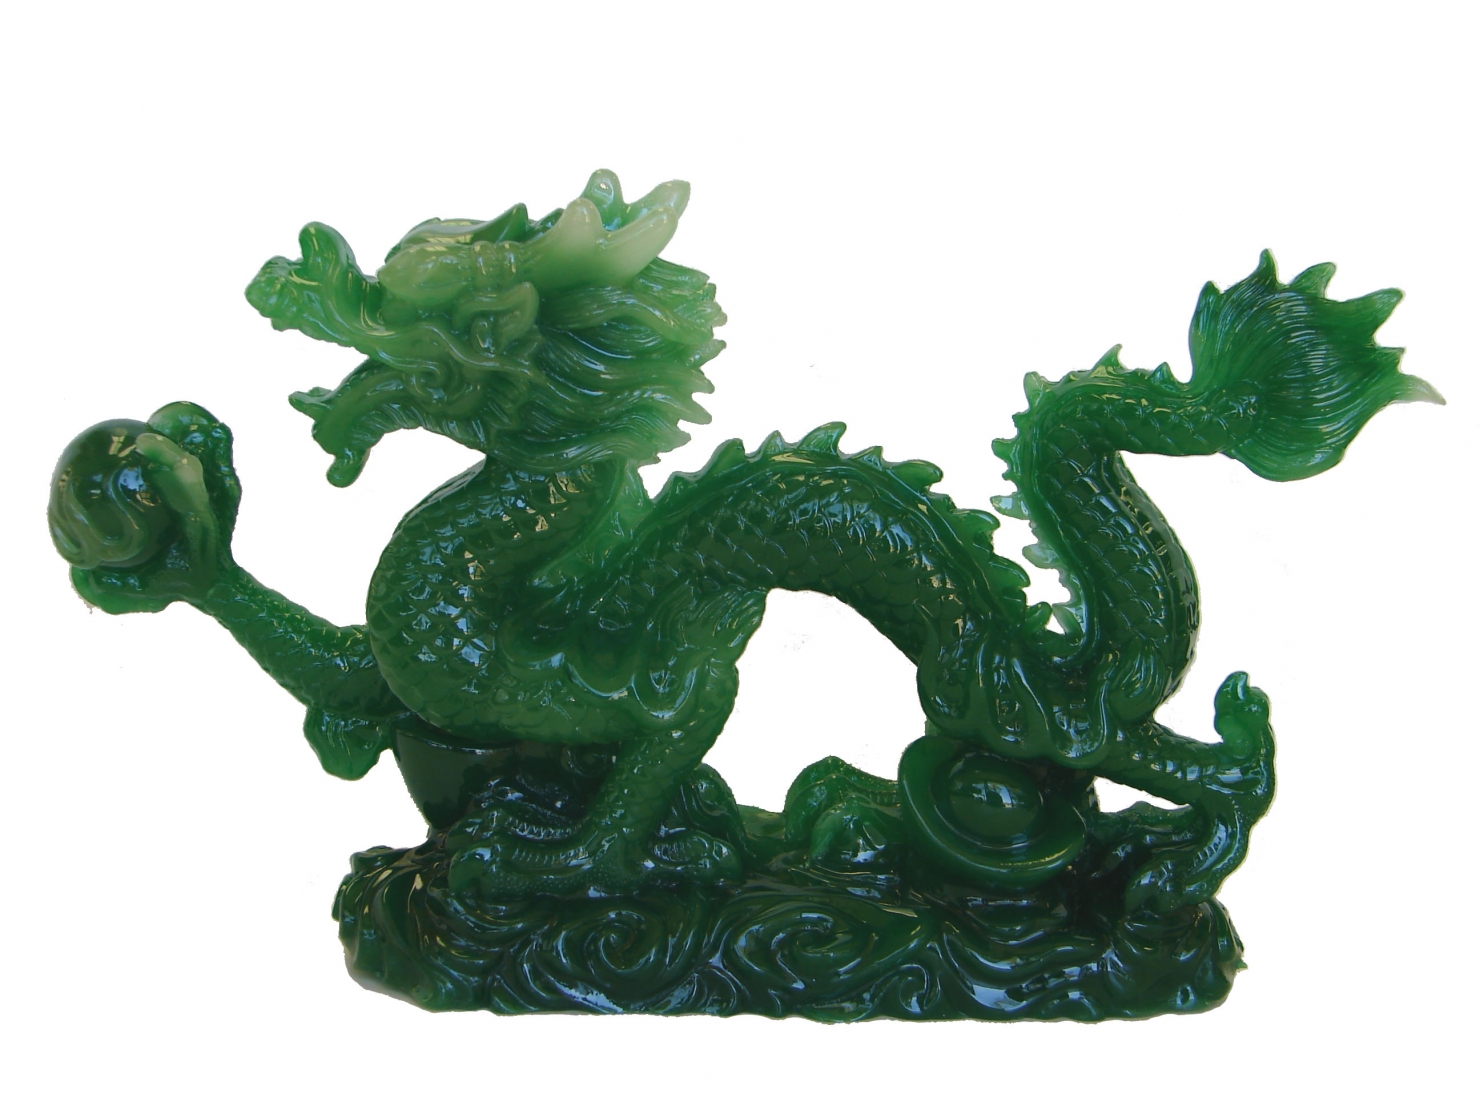 Green Dragon Statue1480 x 1110